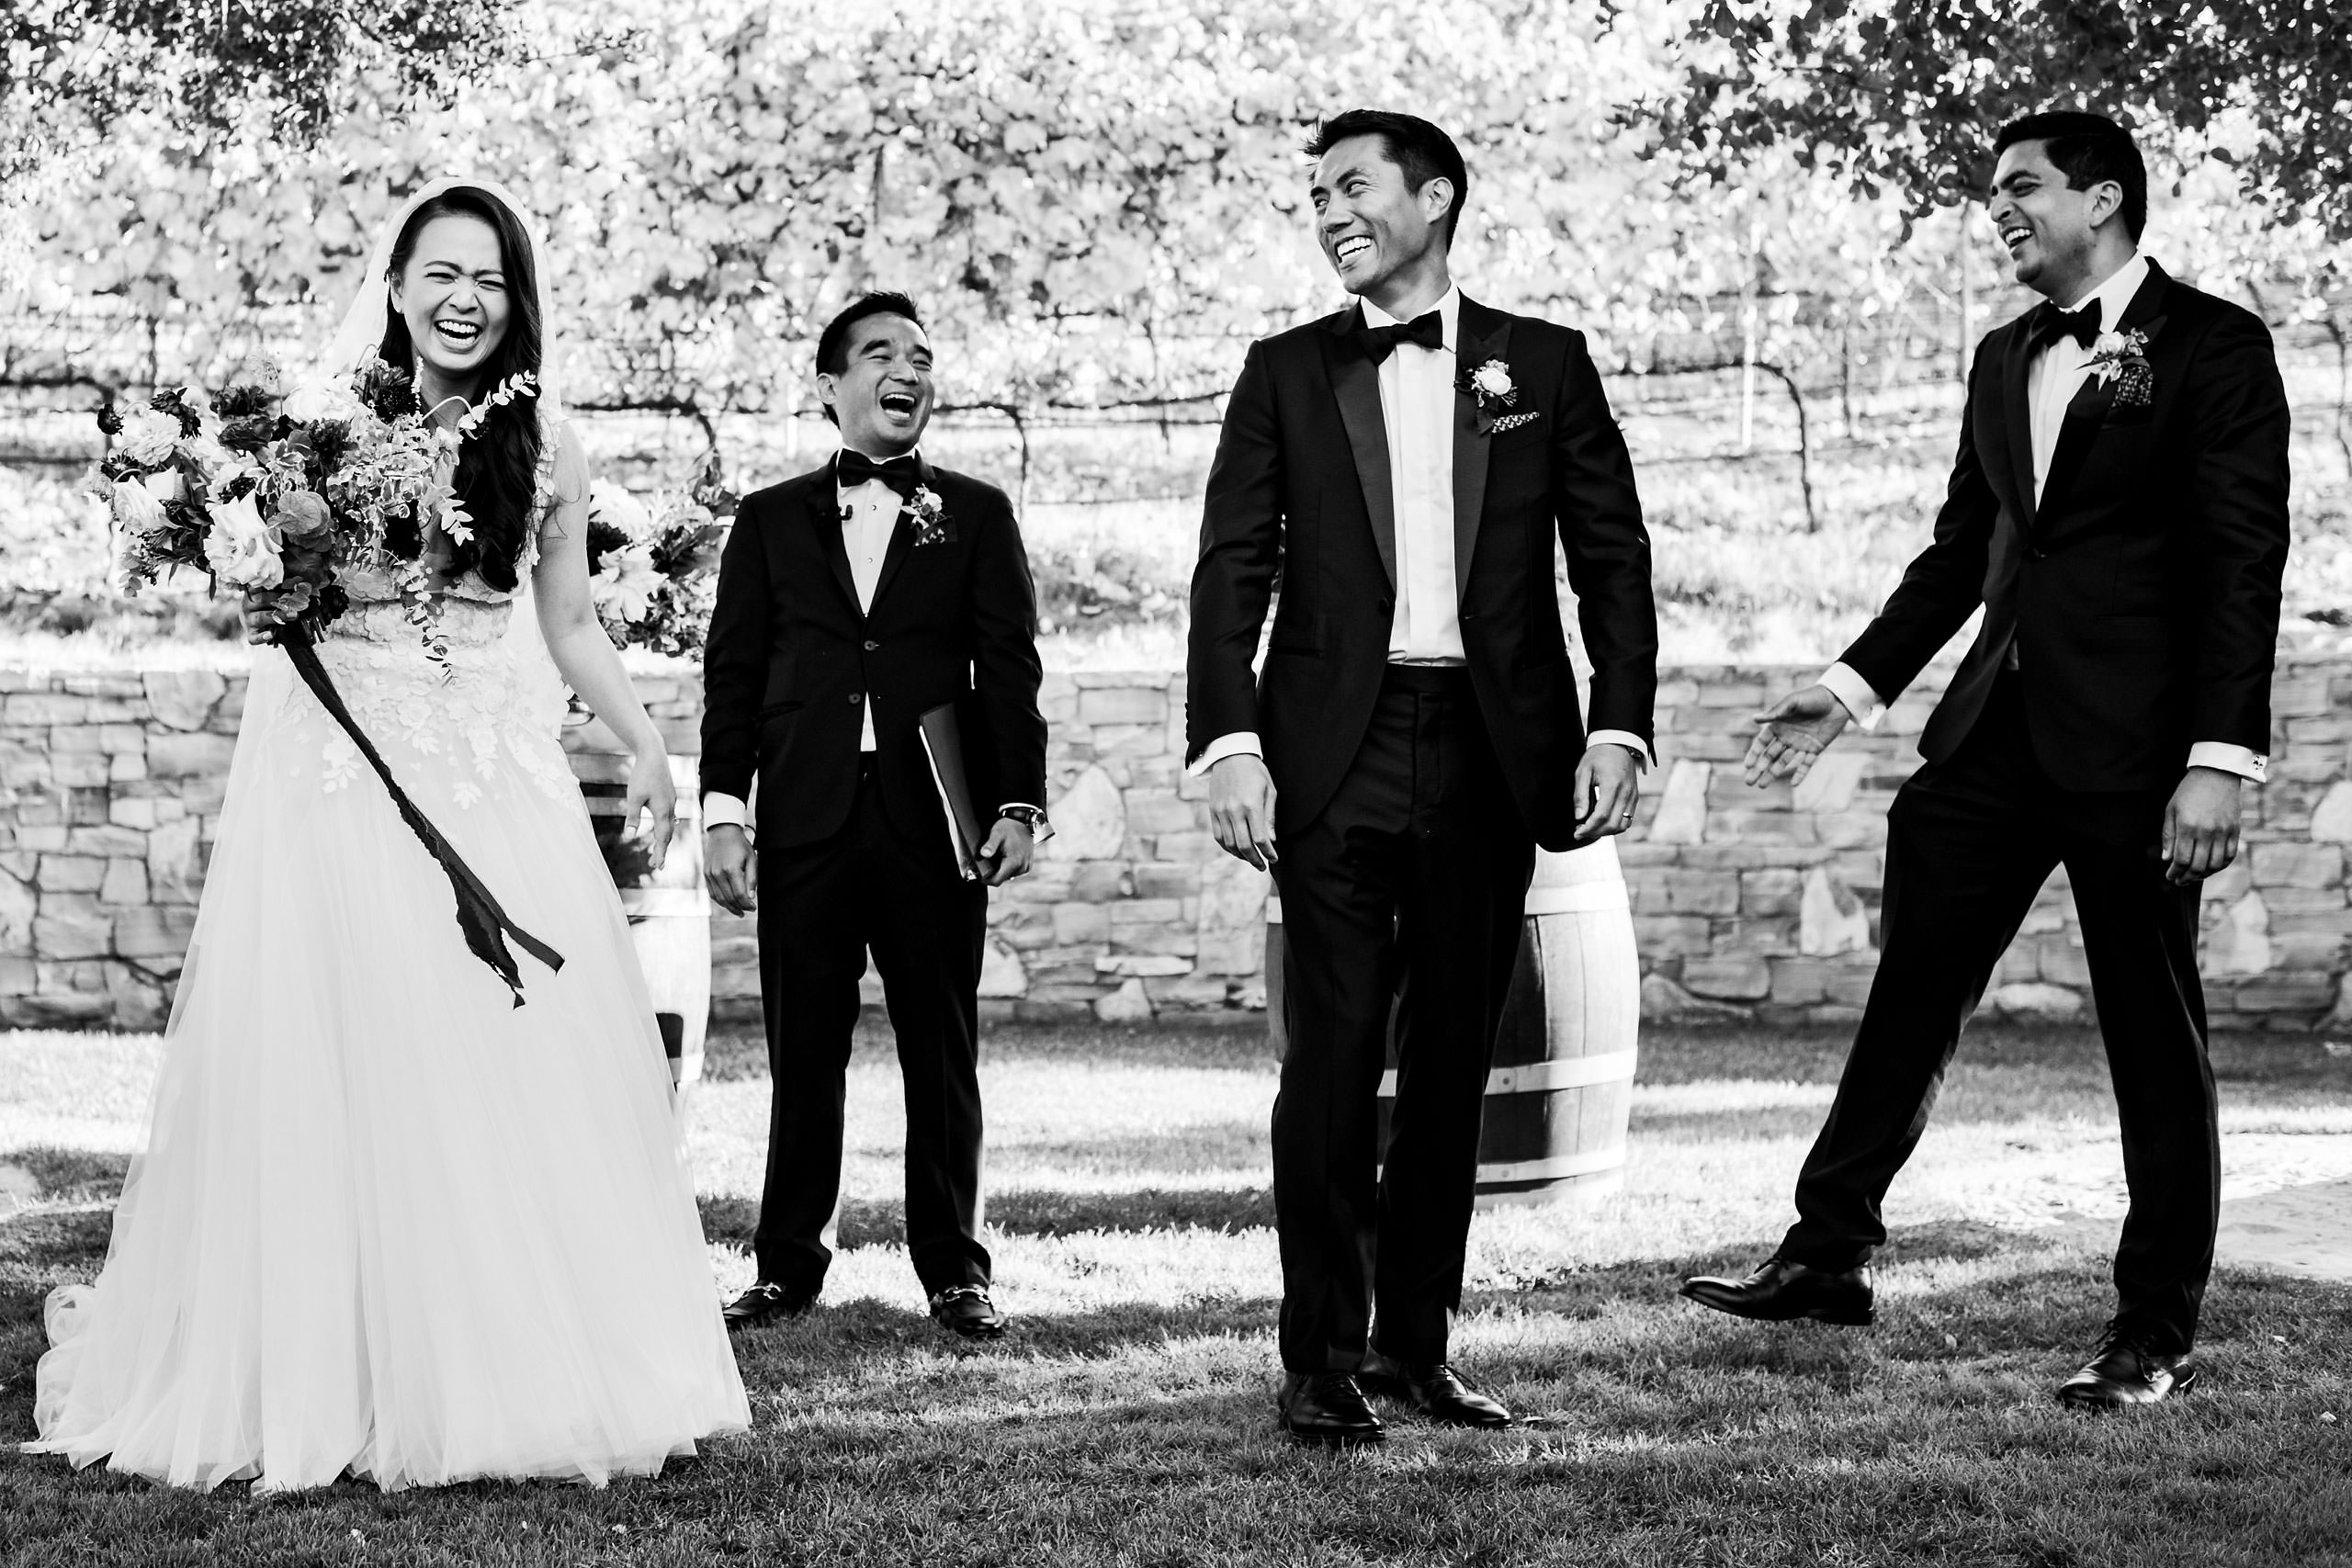 Ceremony by Carmel Valley Ranch Wedding Photographer Sean LeBlanc